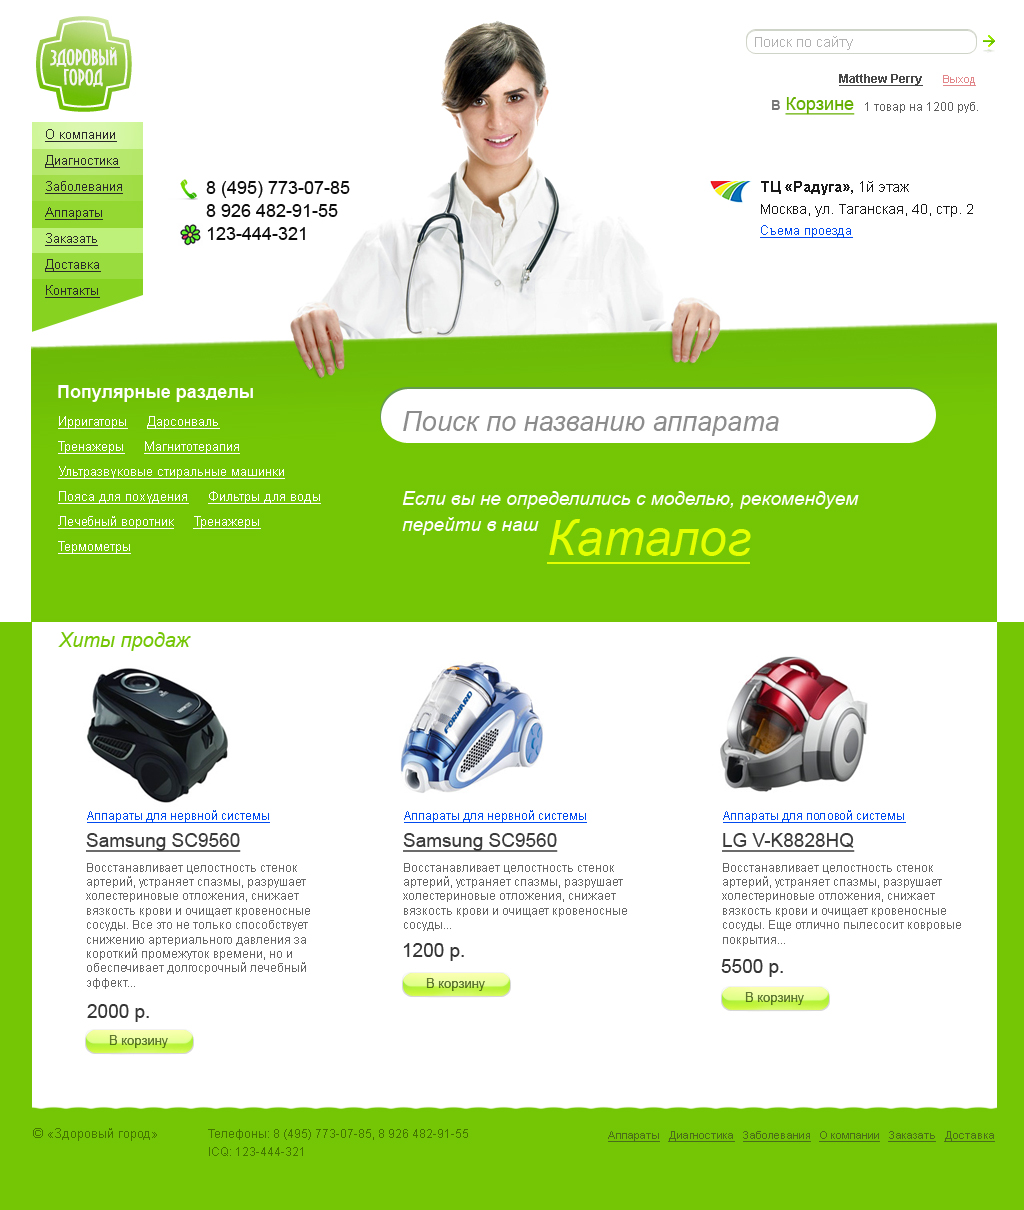 Gramed - интернет-магазин медтехники